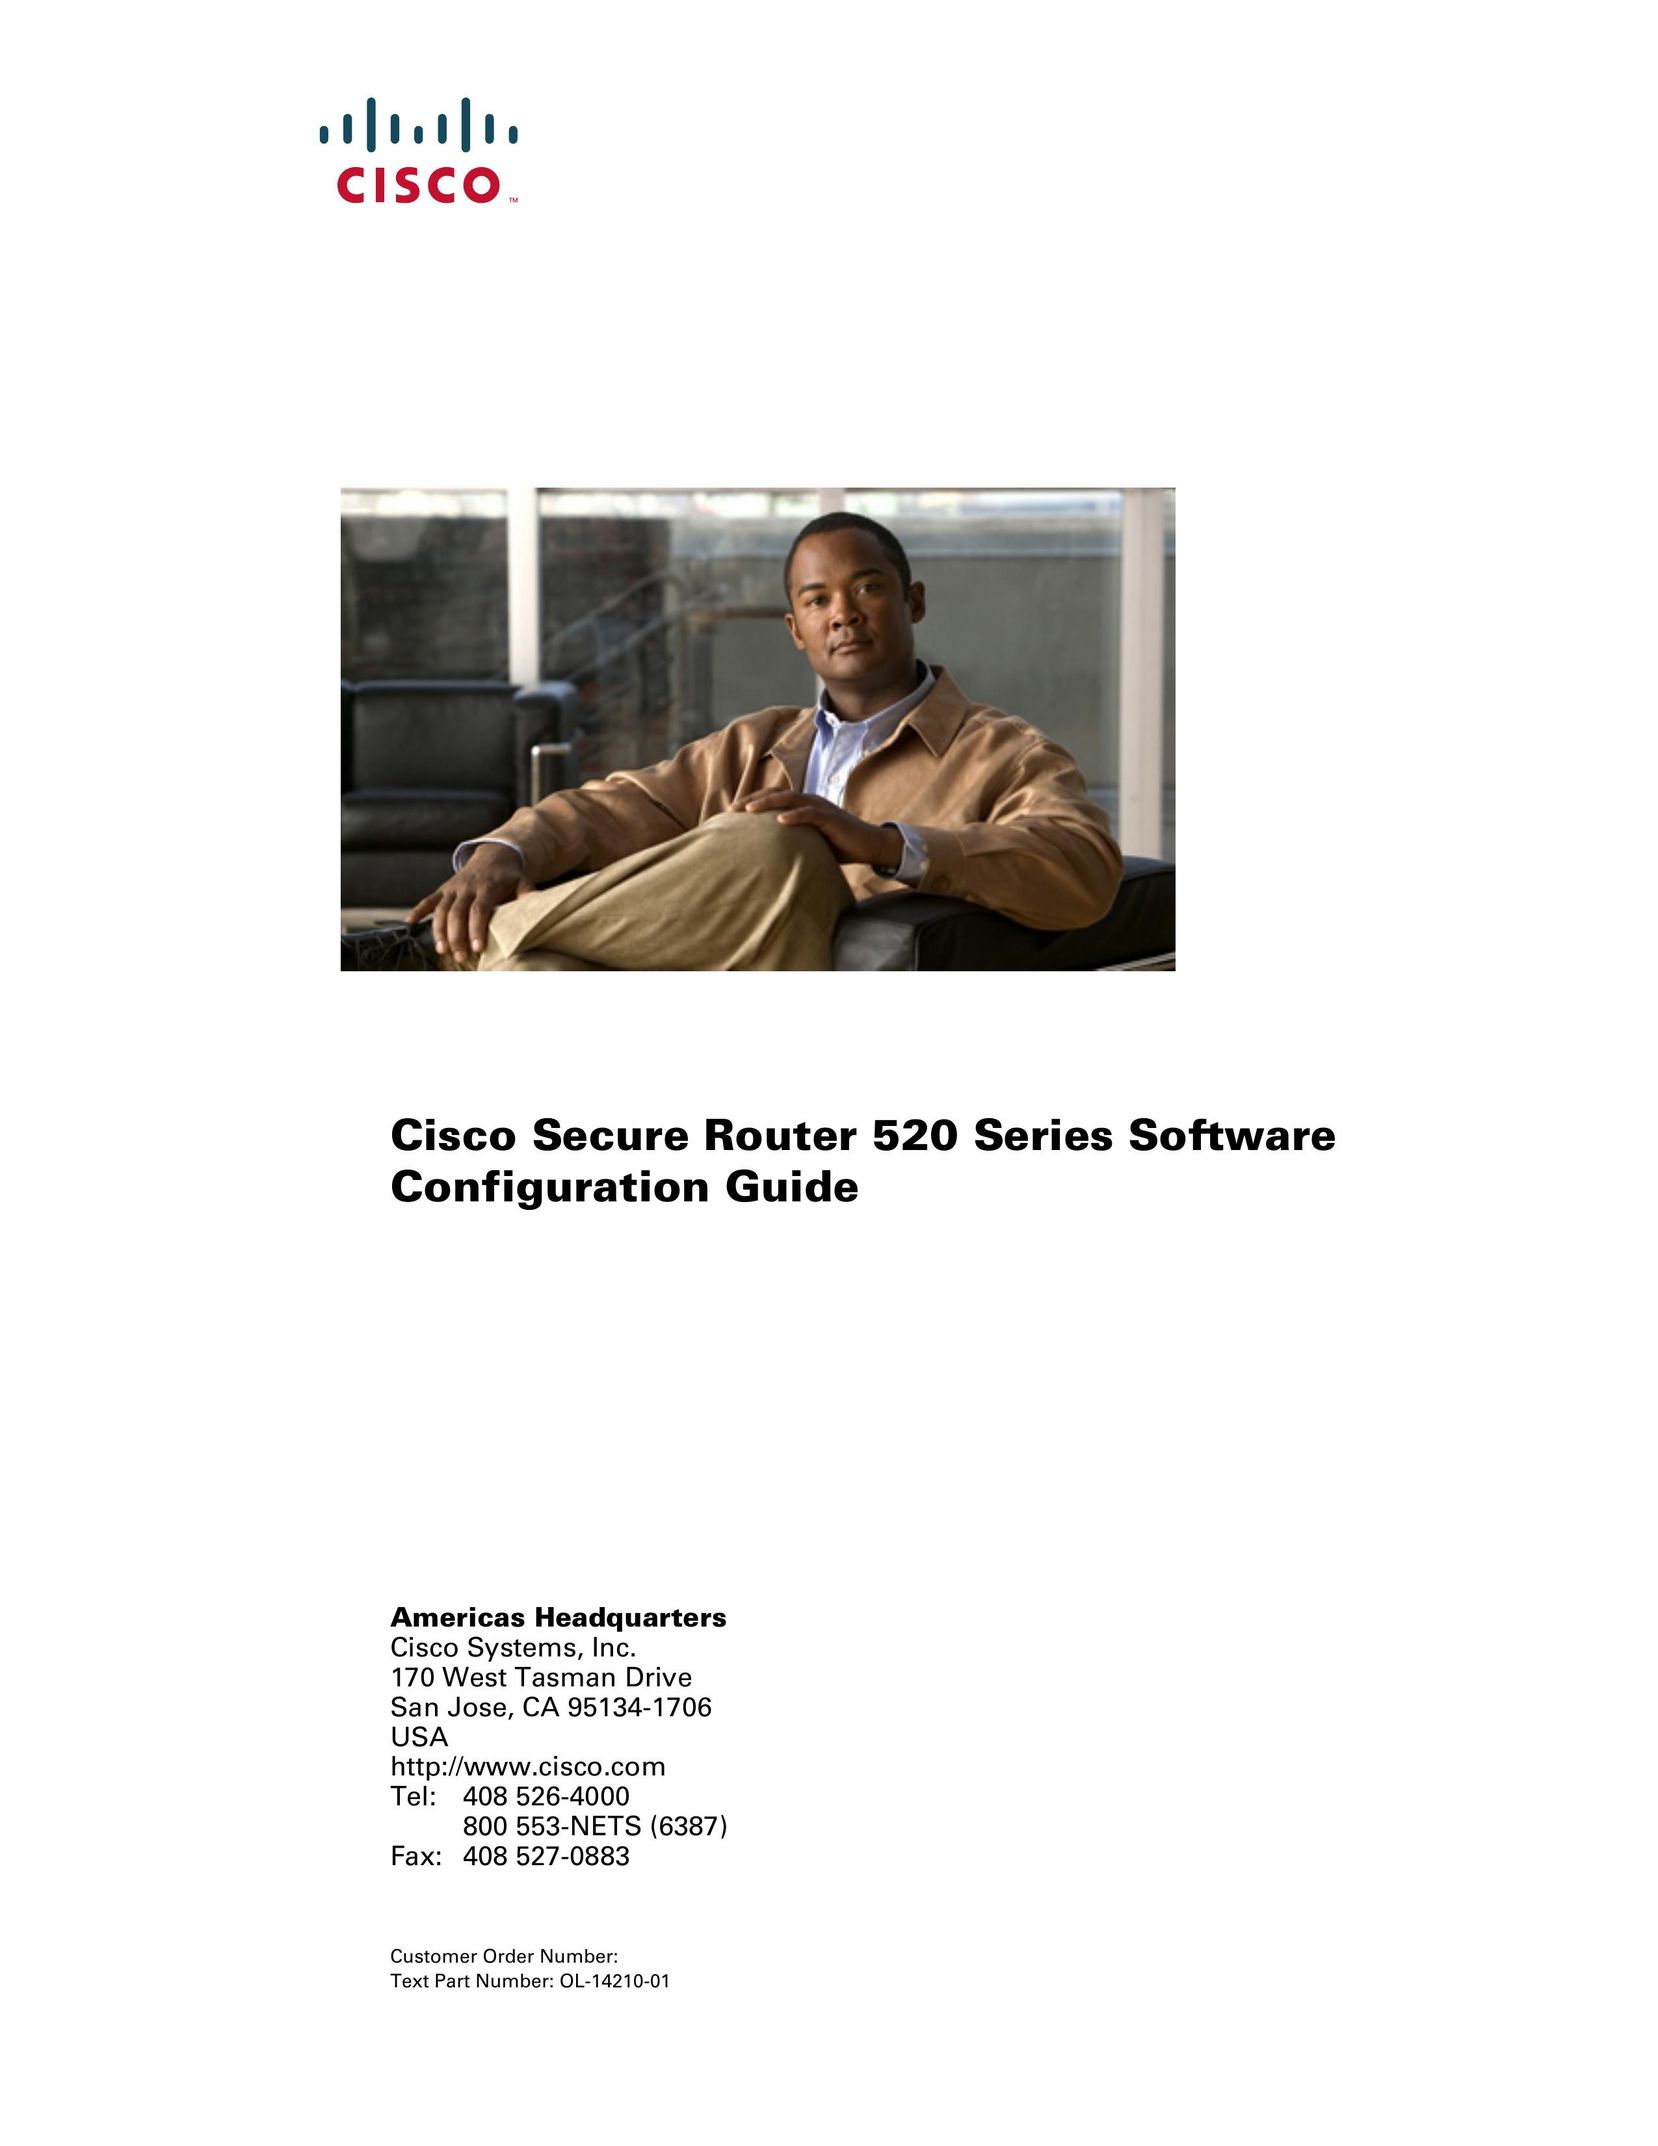 Cisco Systems 520 series Webcam User Manual